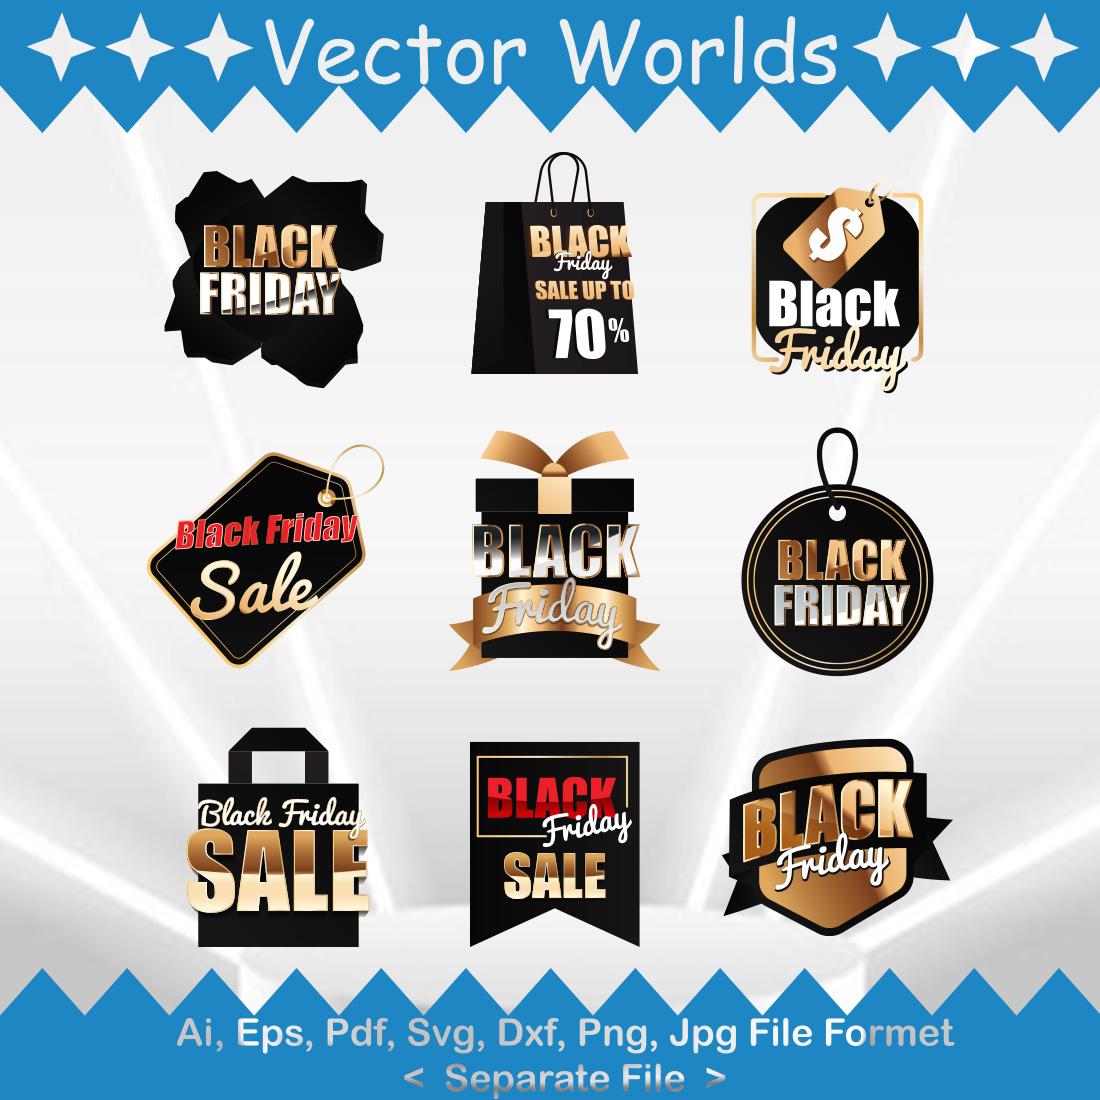 Black Friday SVG Vector Design preview image.